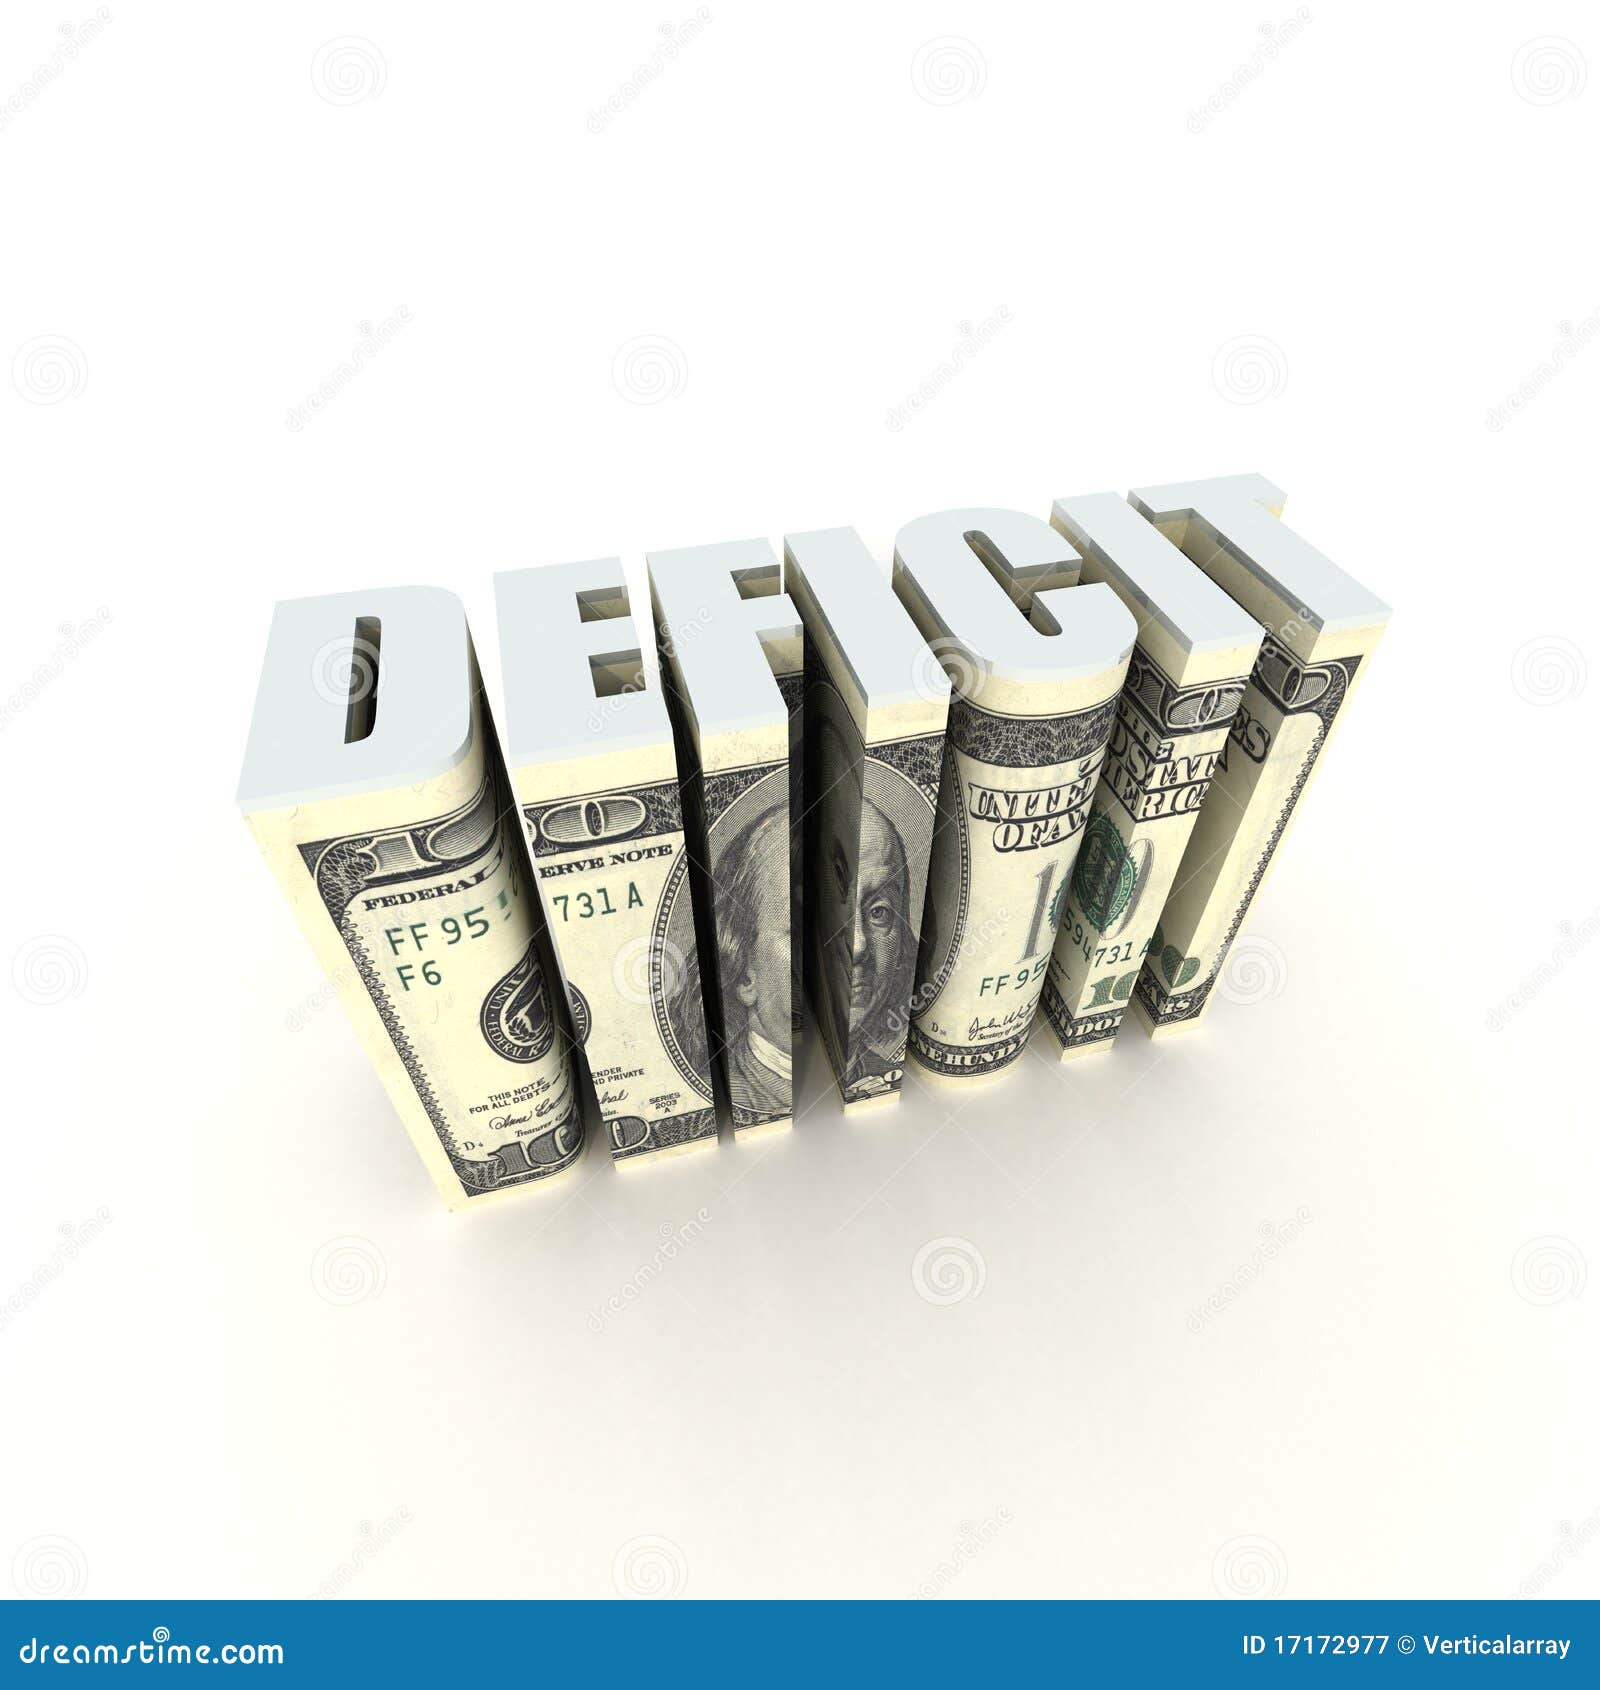 budget deficit